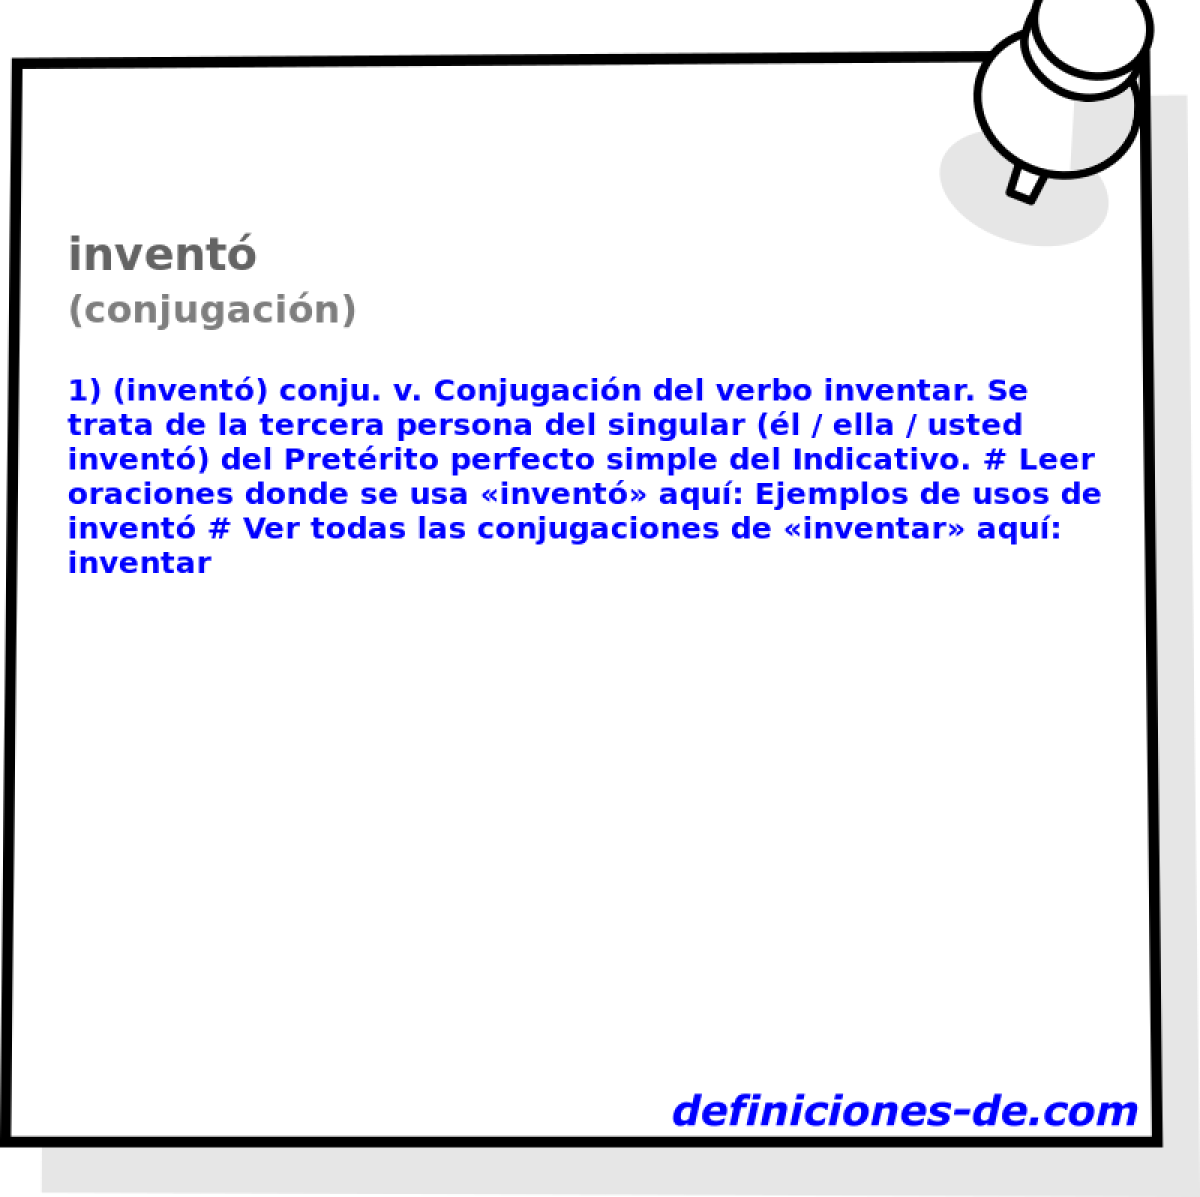 invent (conjugacin)